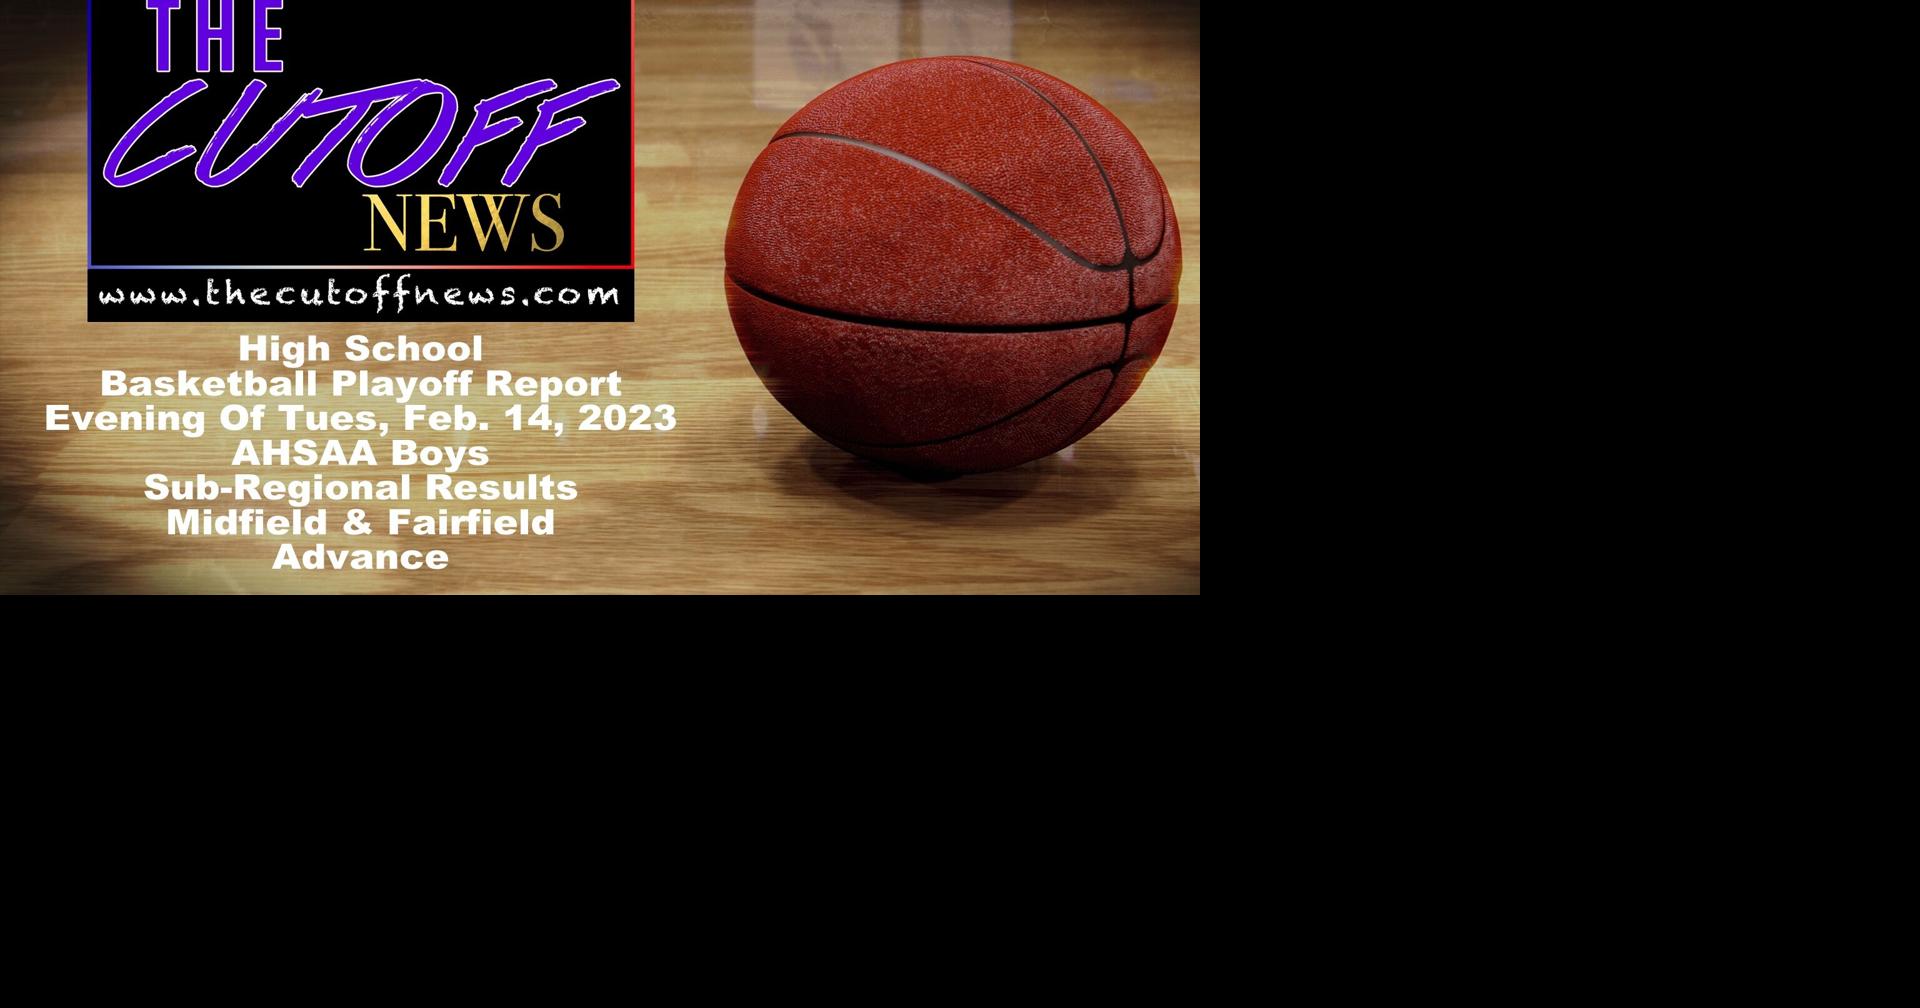 The Cutoff News High School Basketball Playoff Report Evening Of